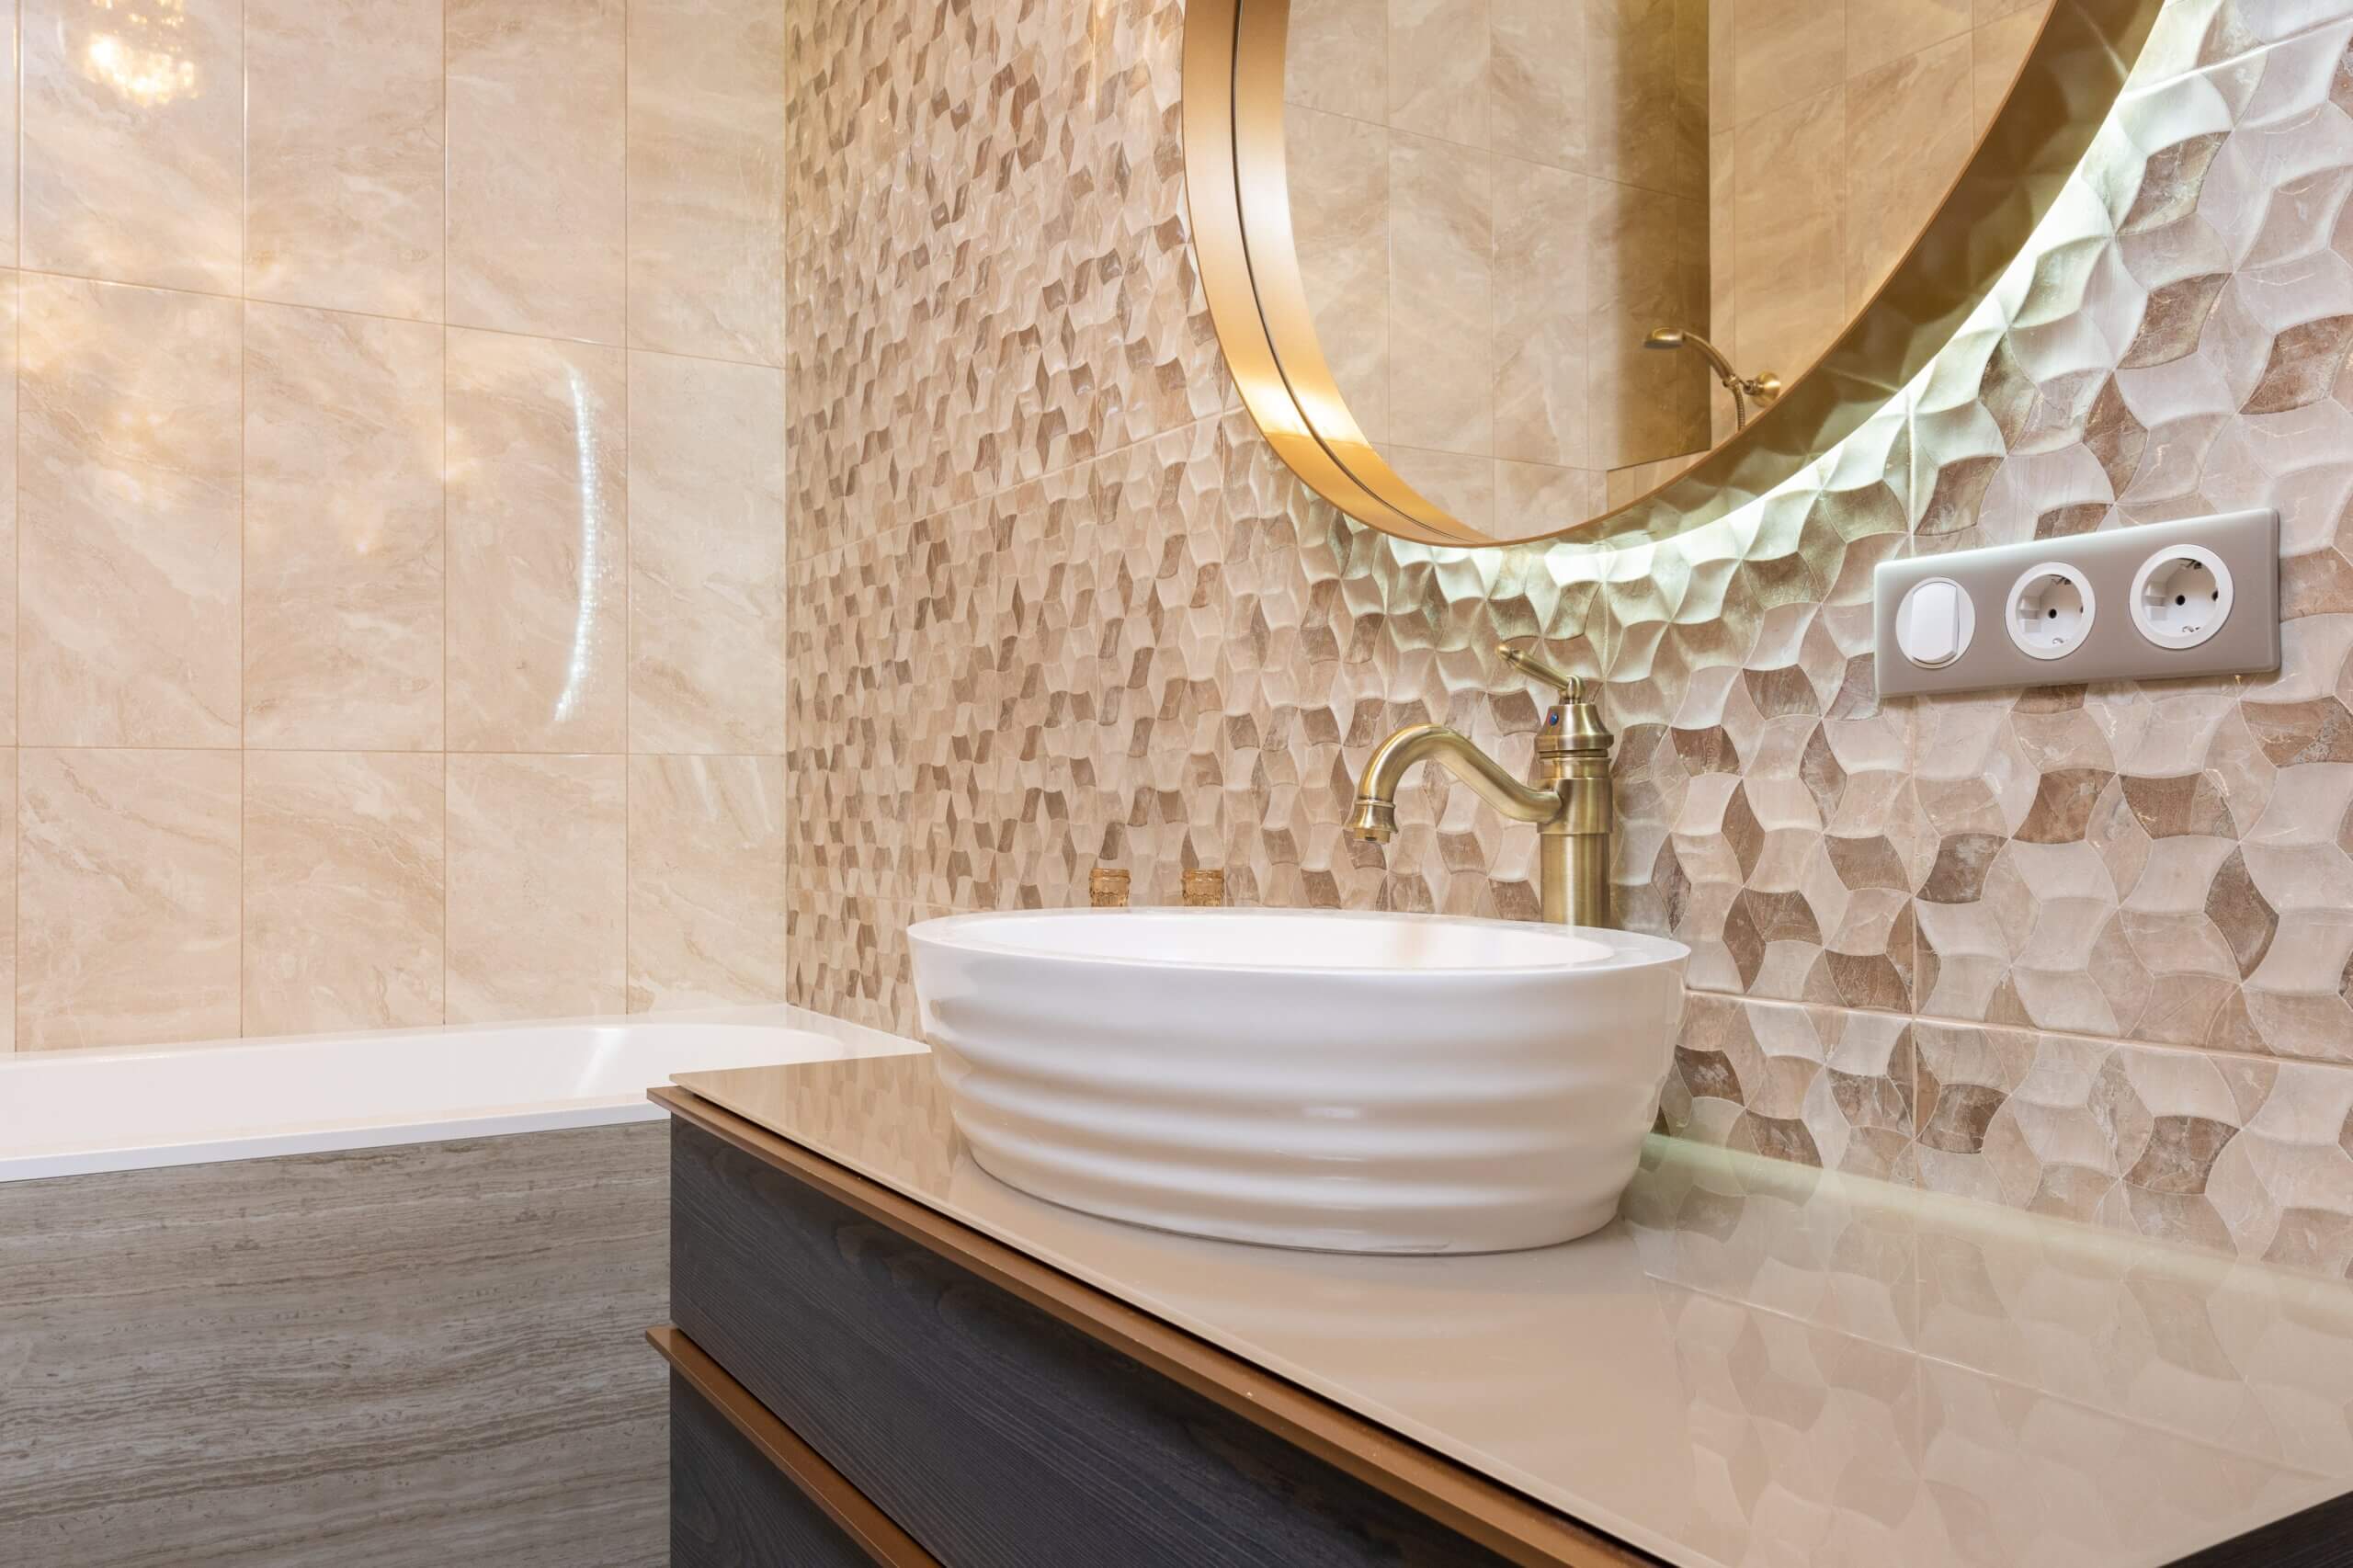 Bathroom textured tiles